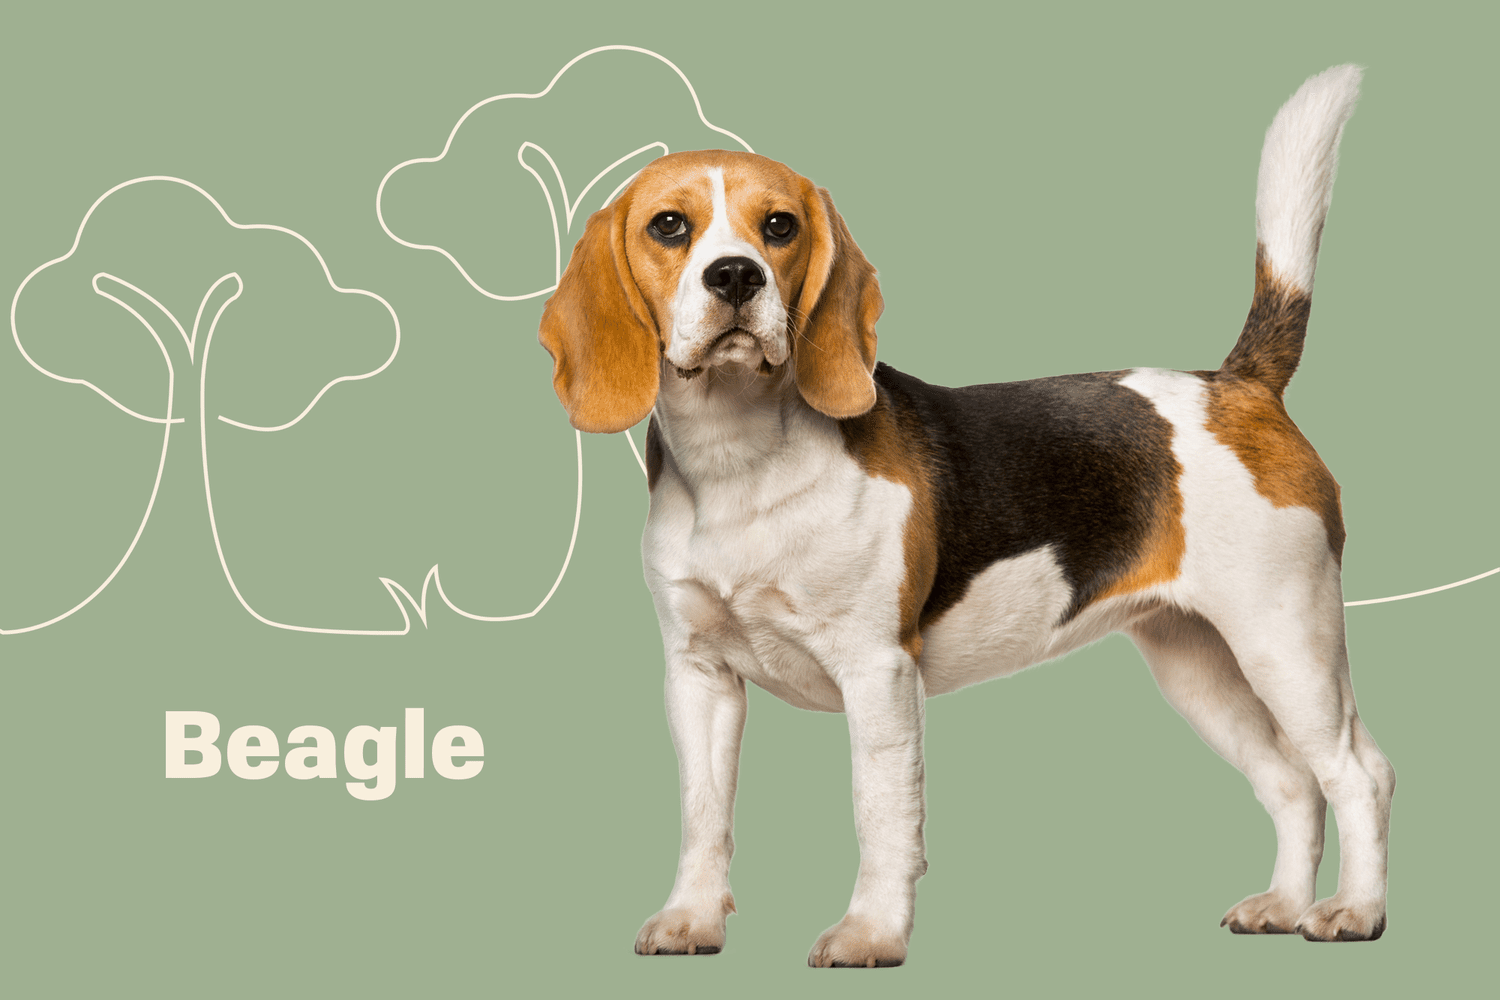 beagle hip issues